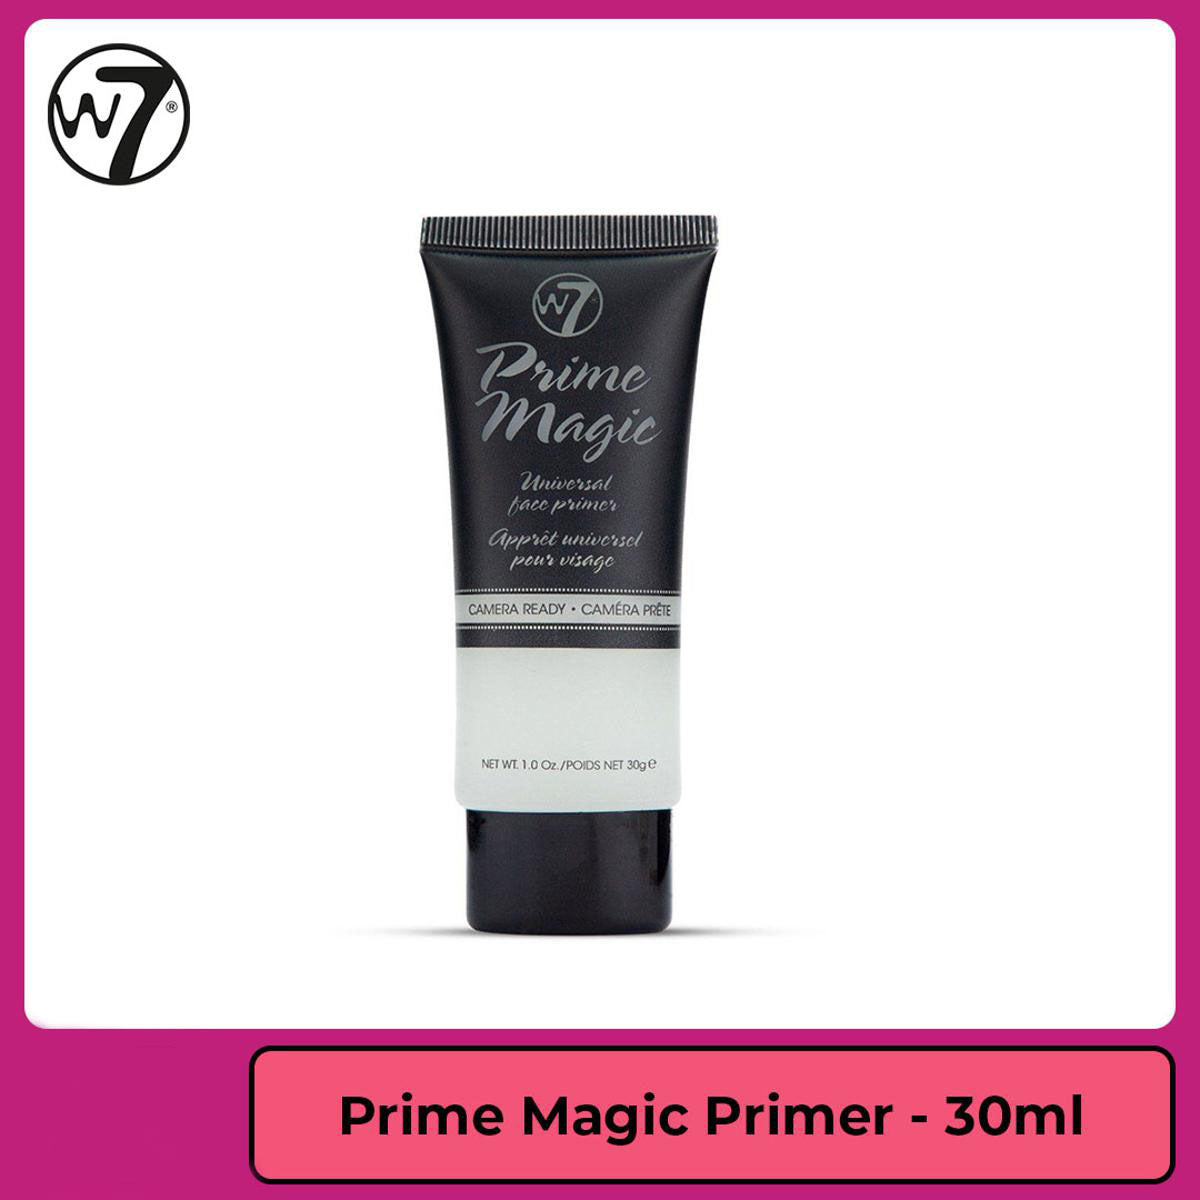 W7 Prime Magic Face Primer (30ml)